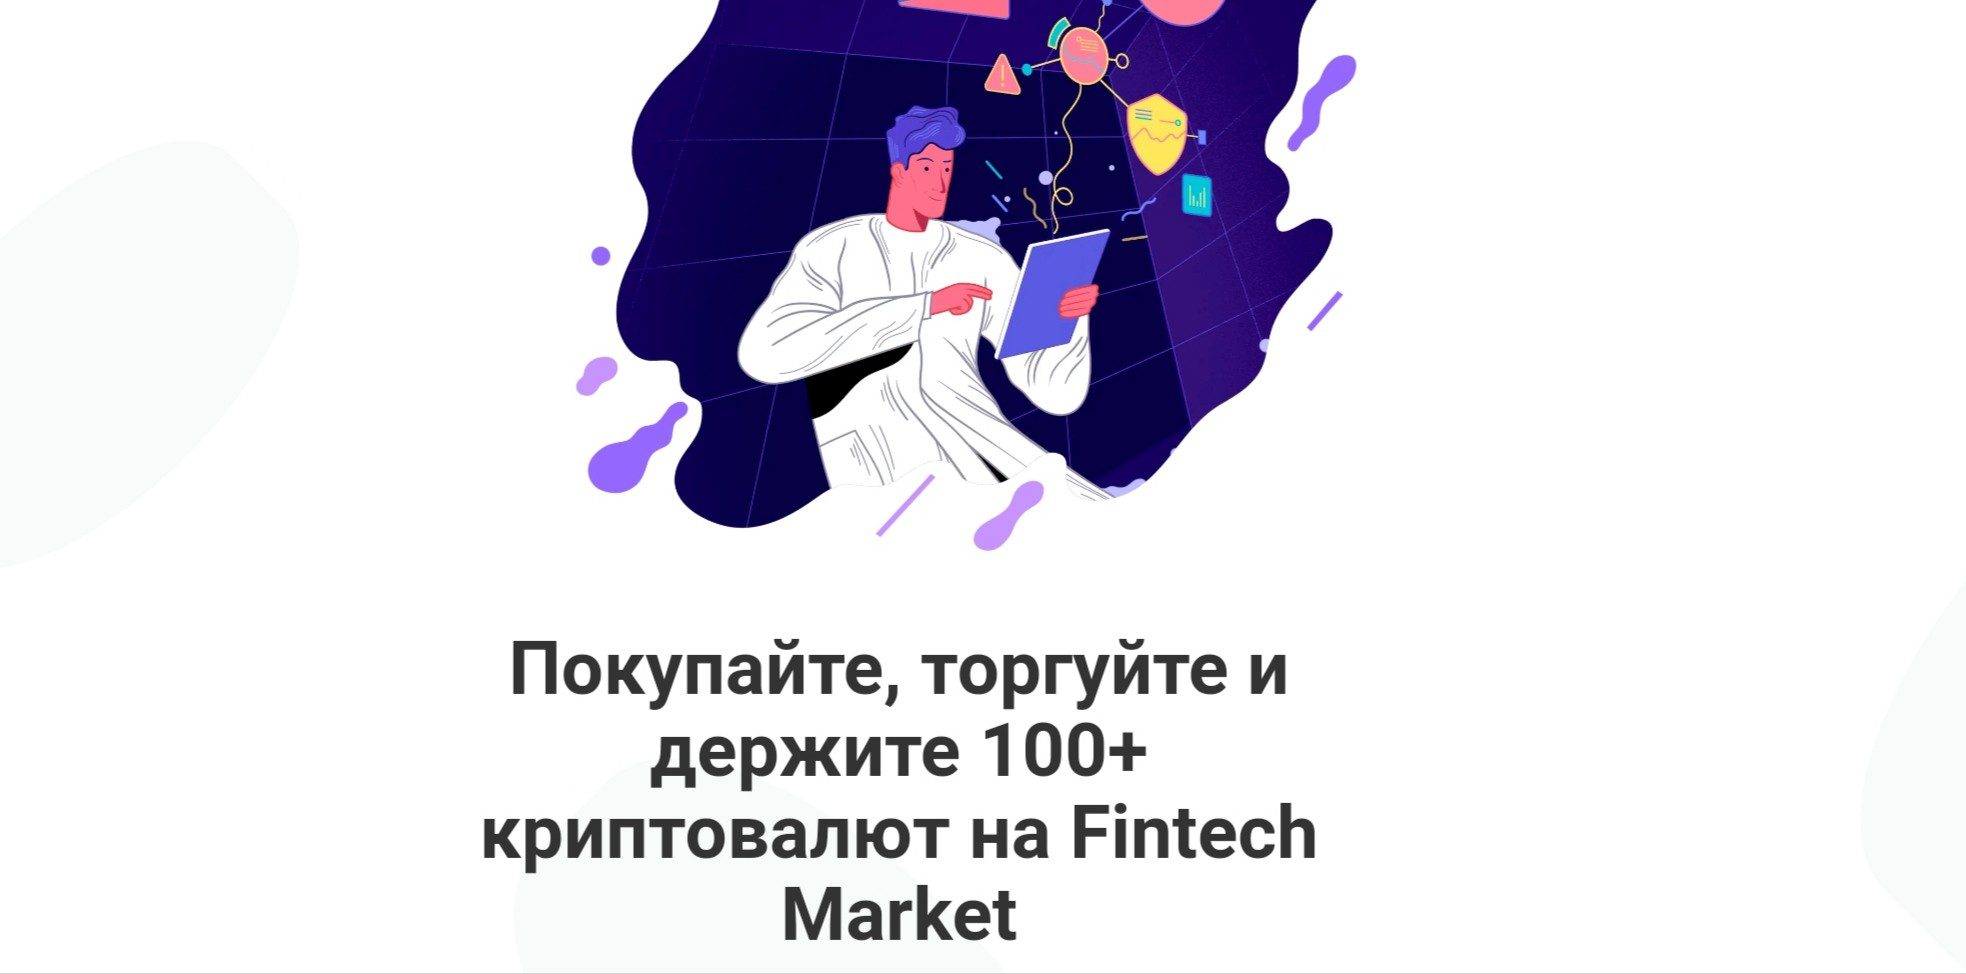 Fintech Market проект обзор